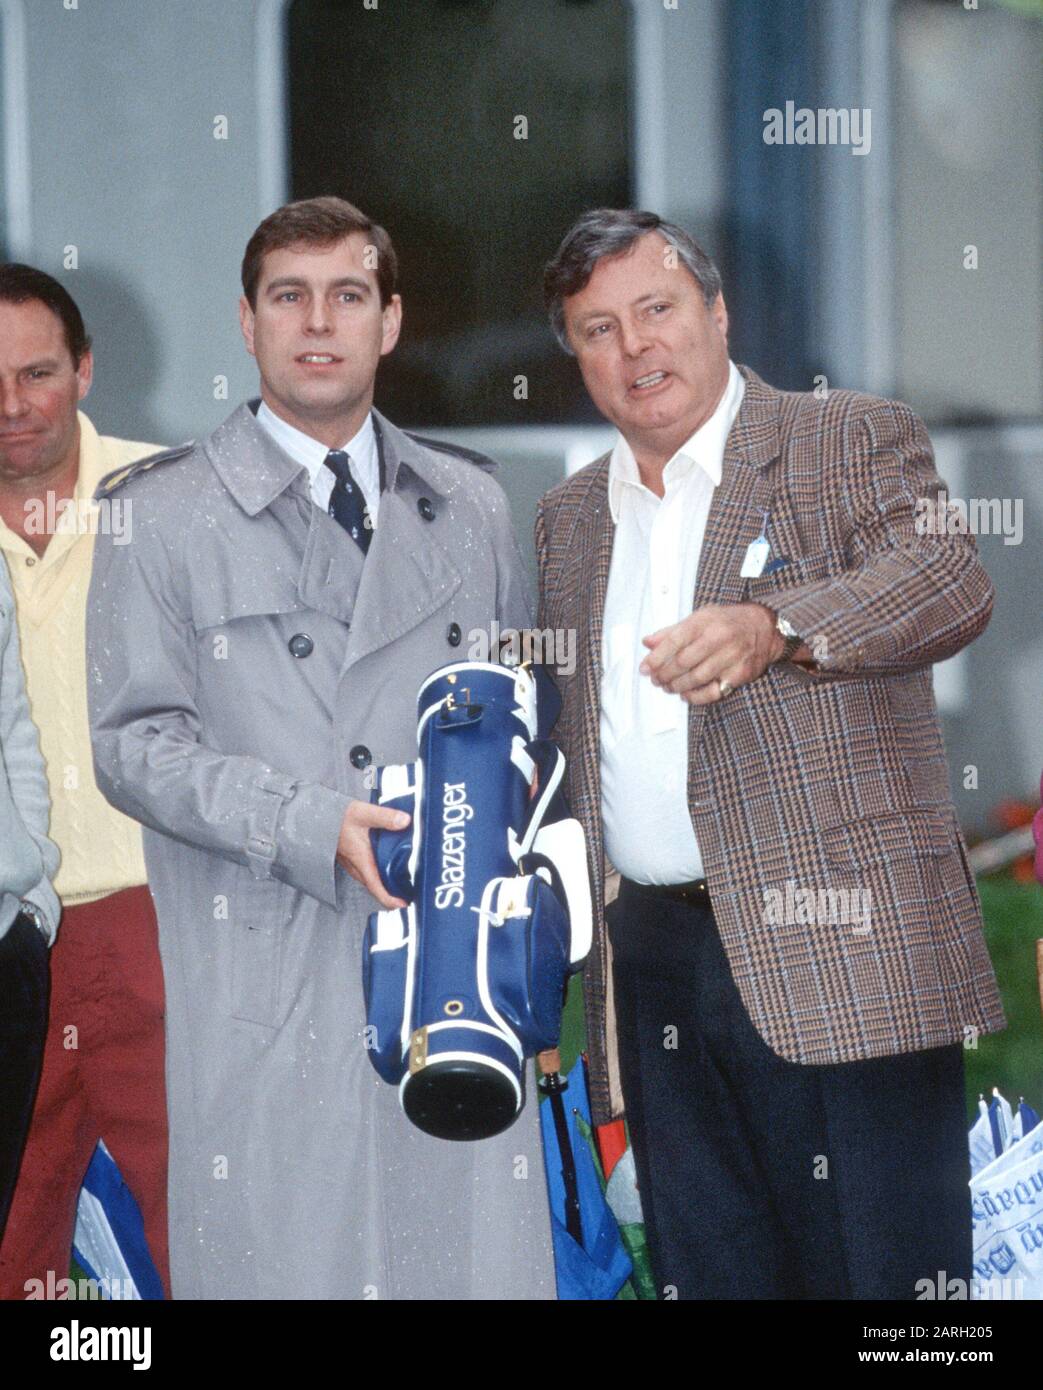 S.H. Prinz Andrew, Duke of York und Peter Allis im Wentworth Golf Club, England September 1992 Stockfoto